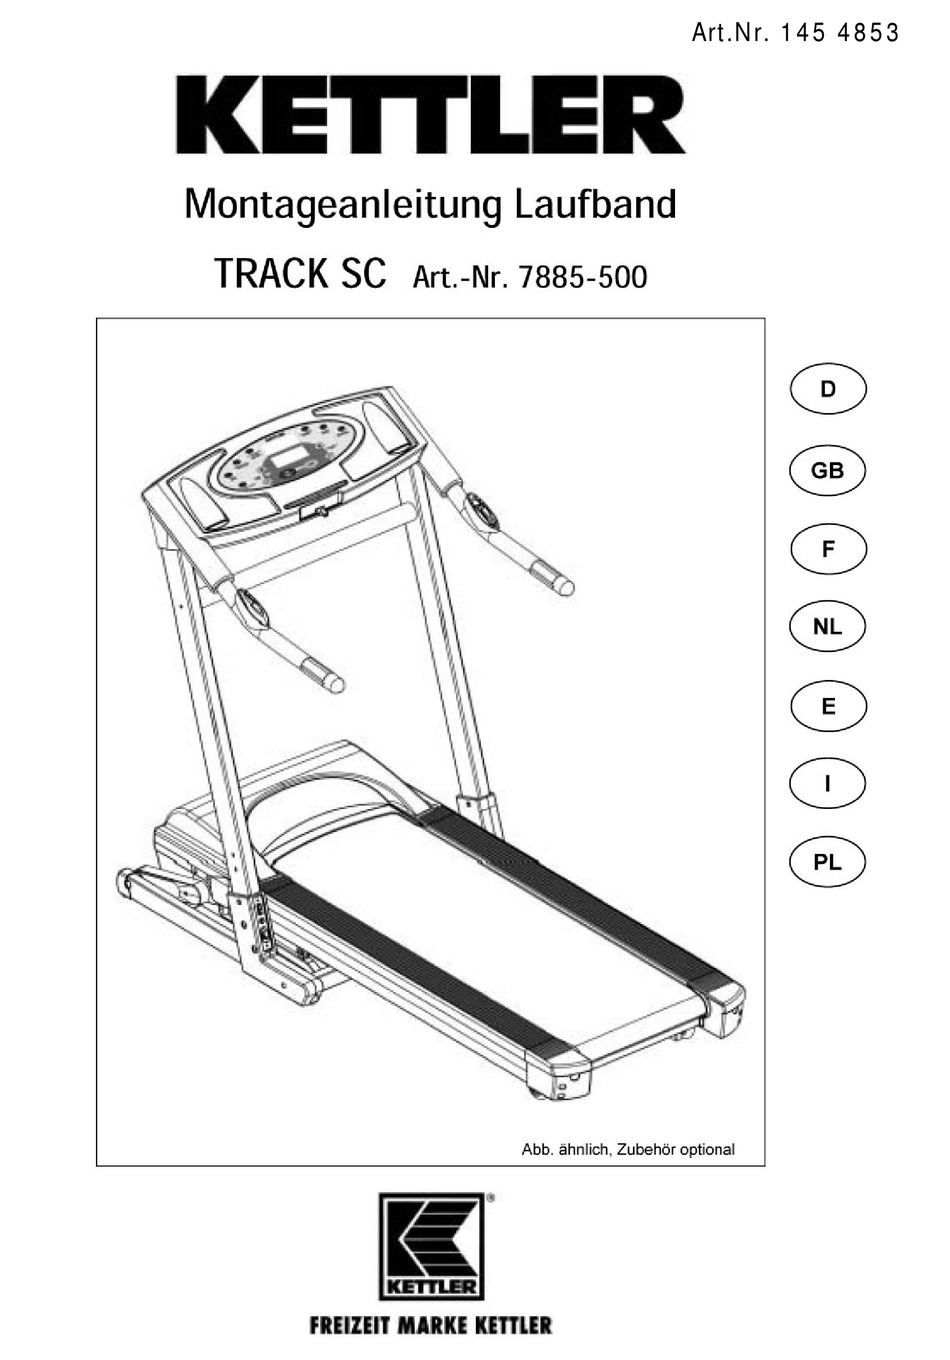 kettler-track-sc-assembly-instructions-manual-pdf-download-manualslib